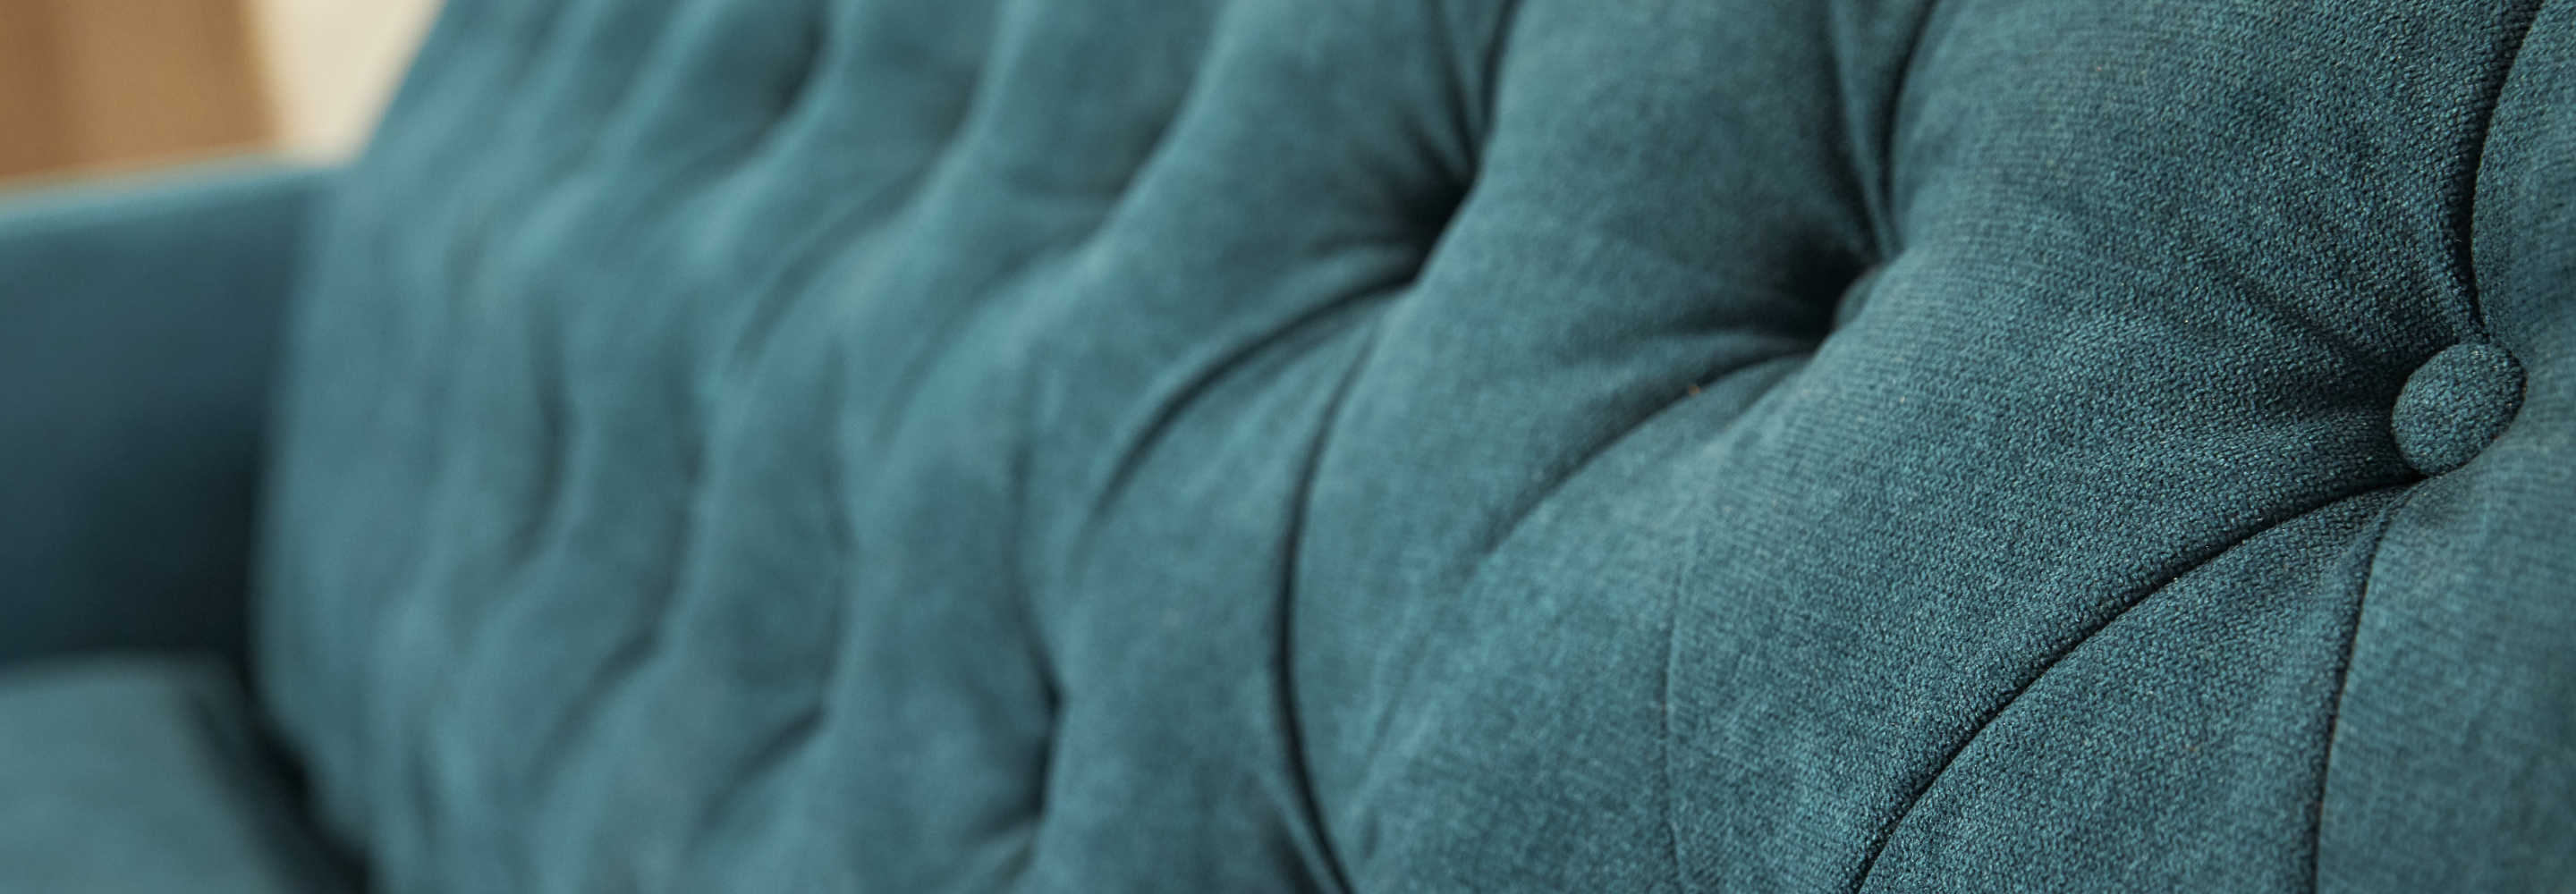 Closeup of sofa back